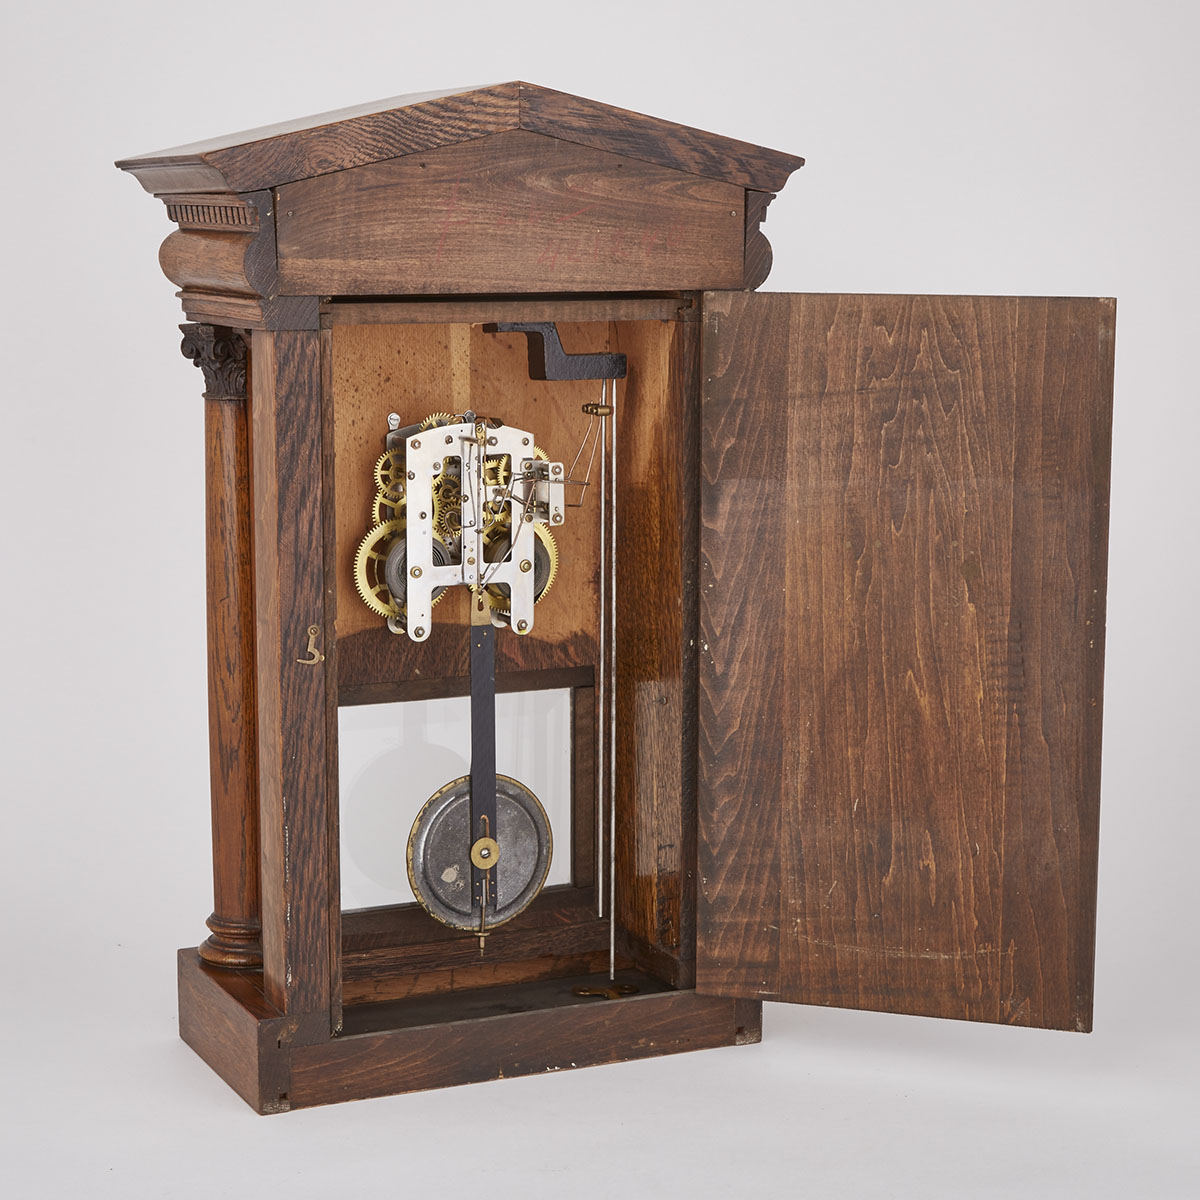 The Arthur Pequegnat Clock Co. ‘Citadel’ Mantel Clock, Berlin, Ontario, c.1904